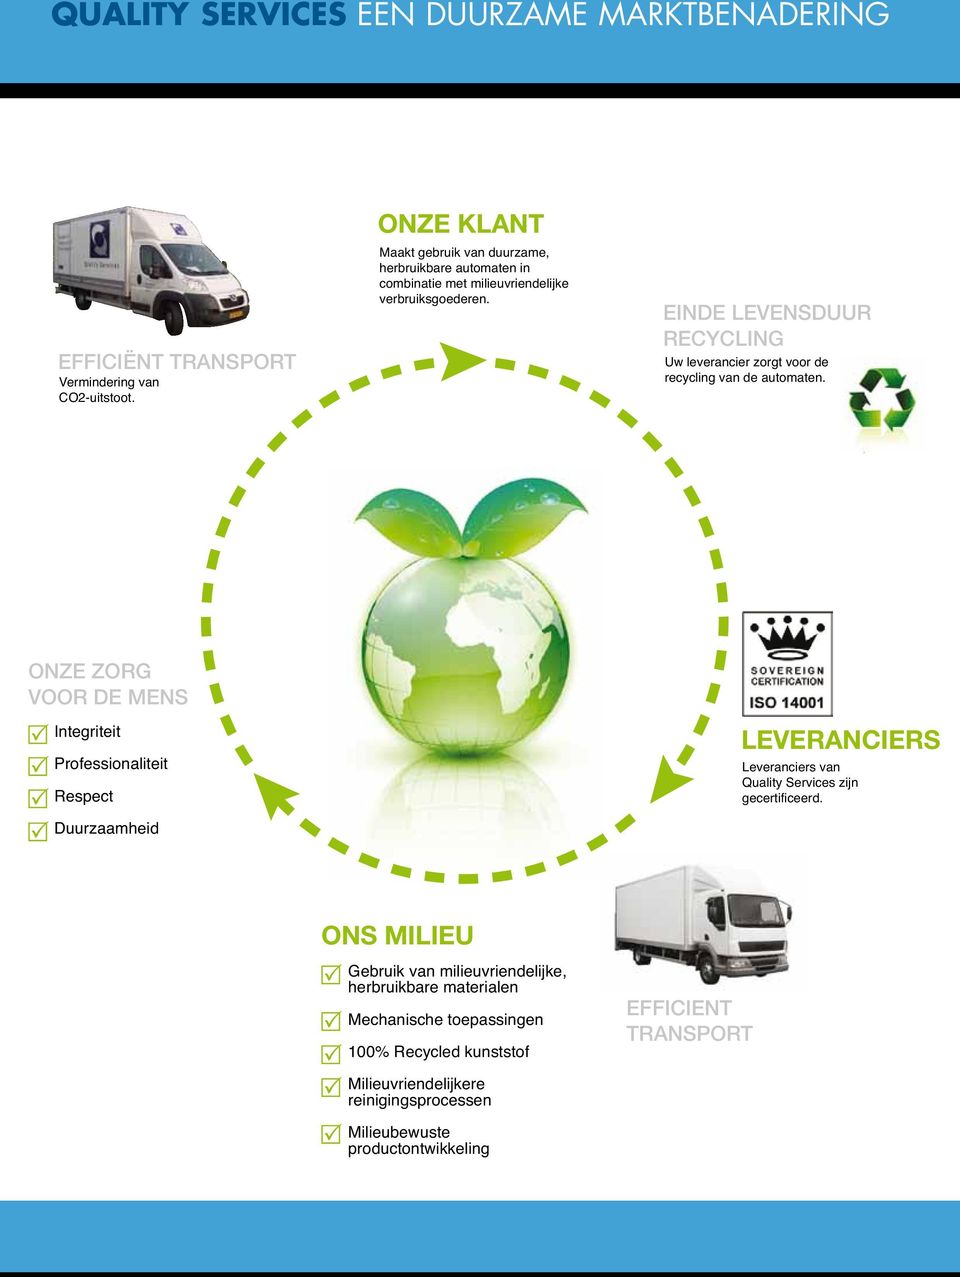 EINDE LEVENSDUU ECYCLING Uw leverancier zorgt voor de recycling van de automaten.